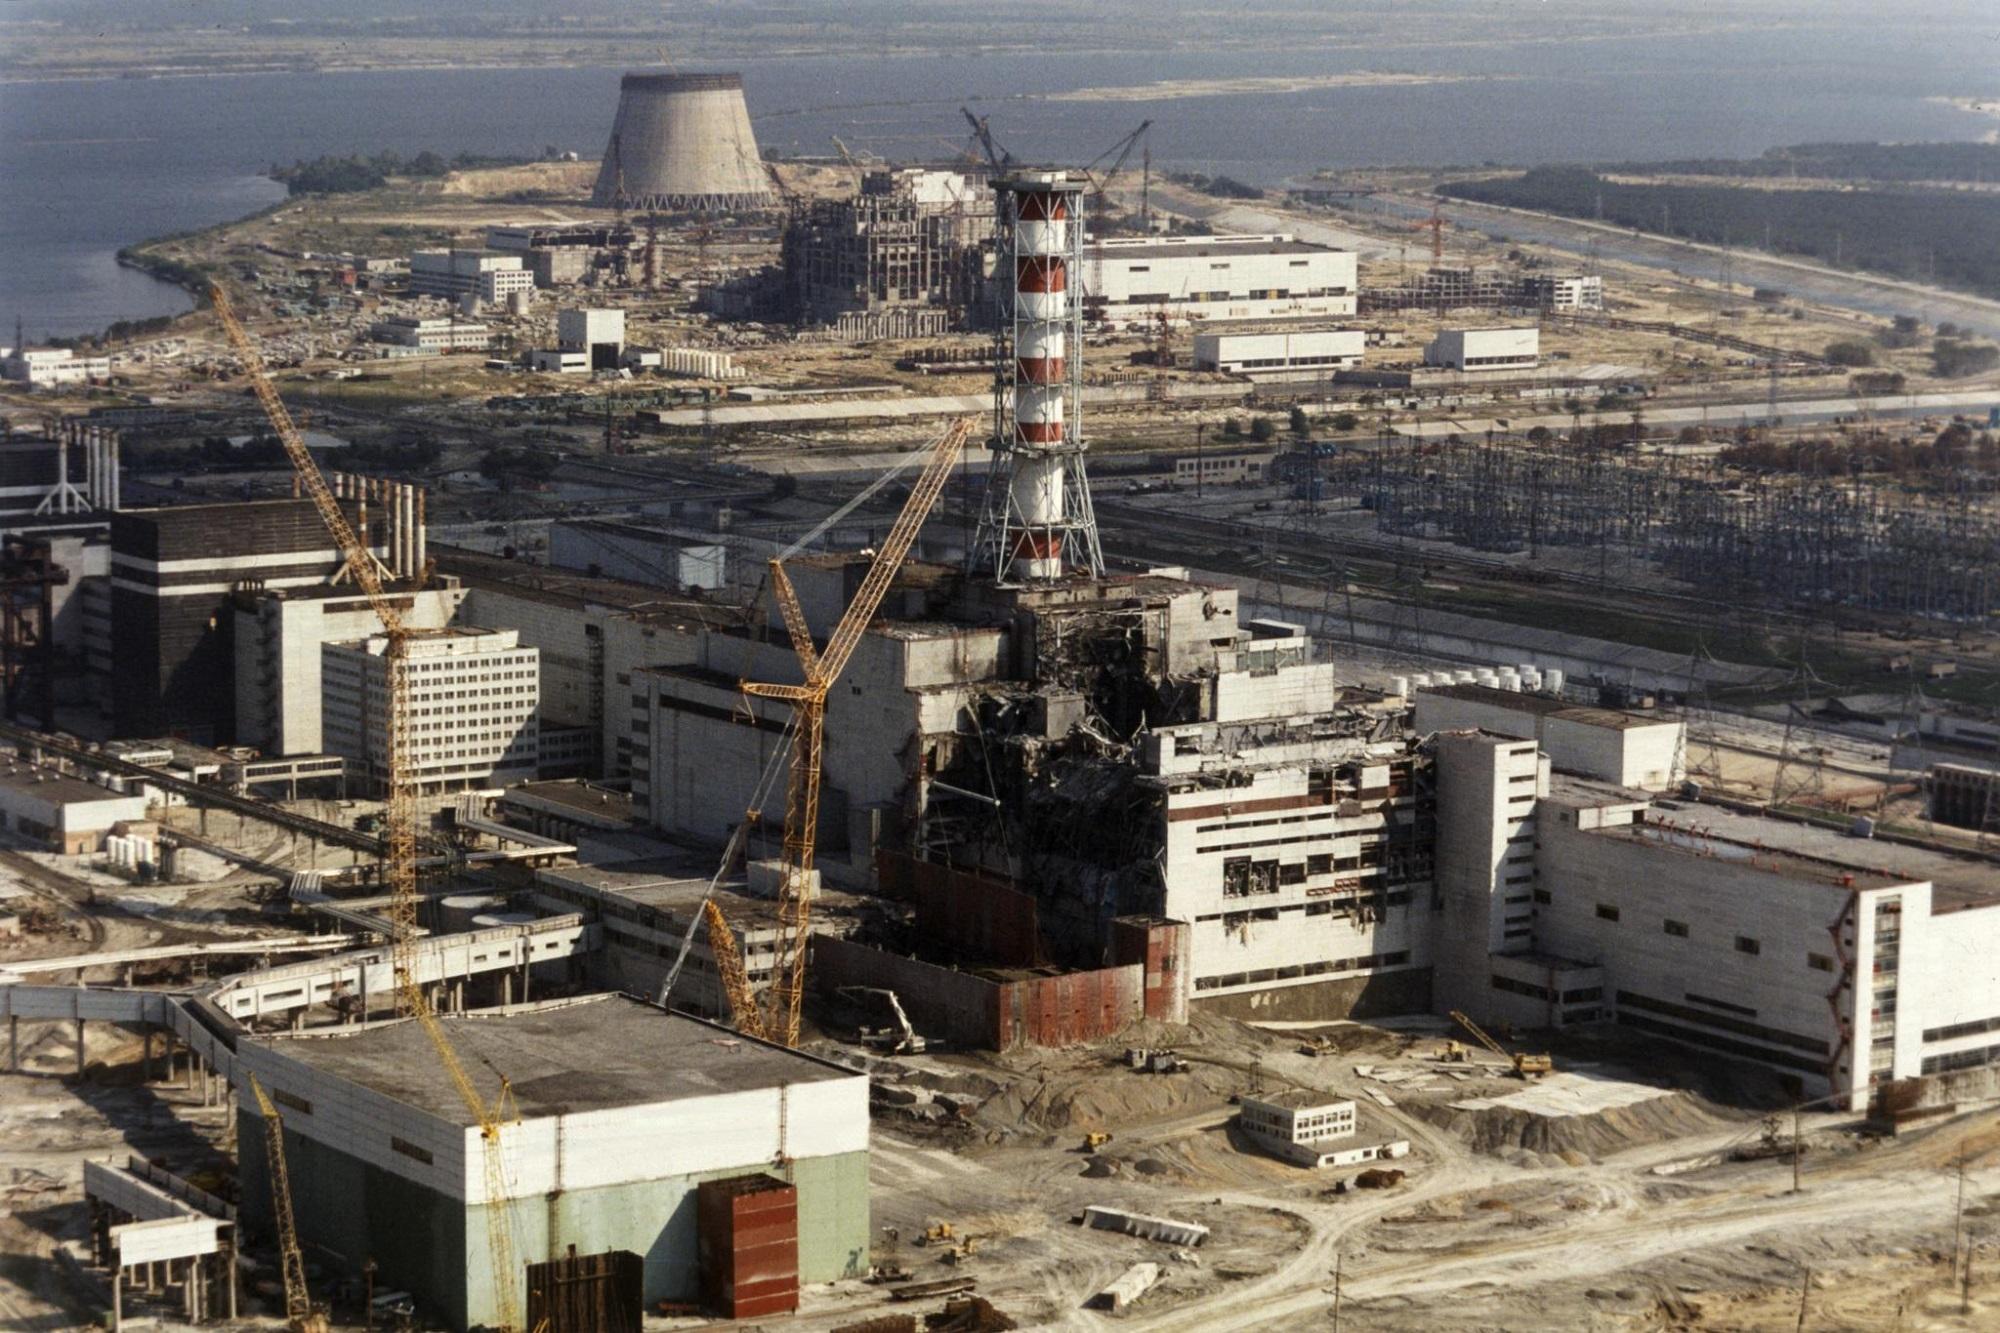 Fotografía tomada el 1 de octubre de 1986, cinco meses después de que estallara el reactor número 4 de la central nuclear de Chernóbil. Foto AFP.